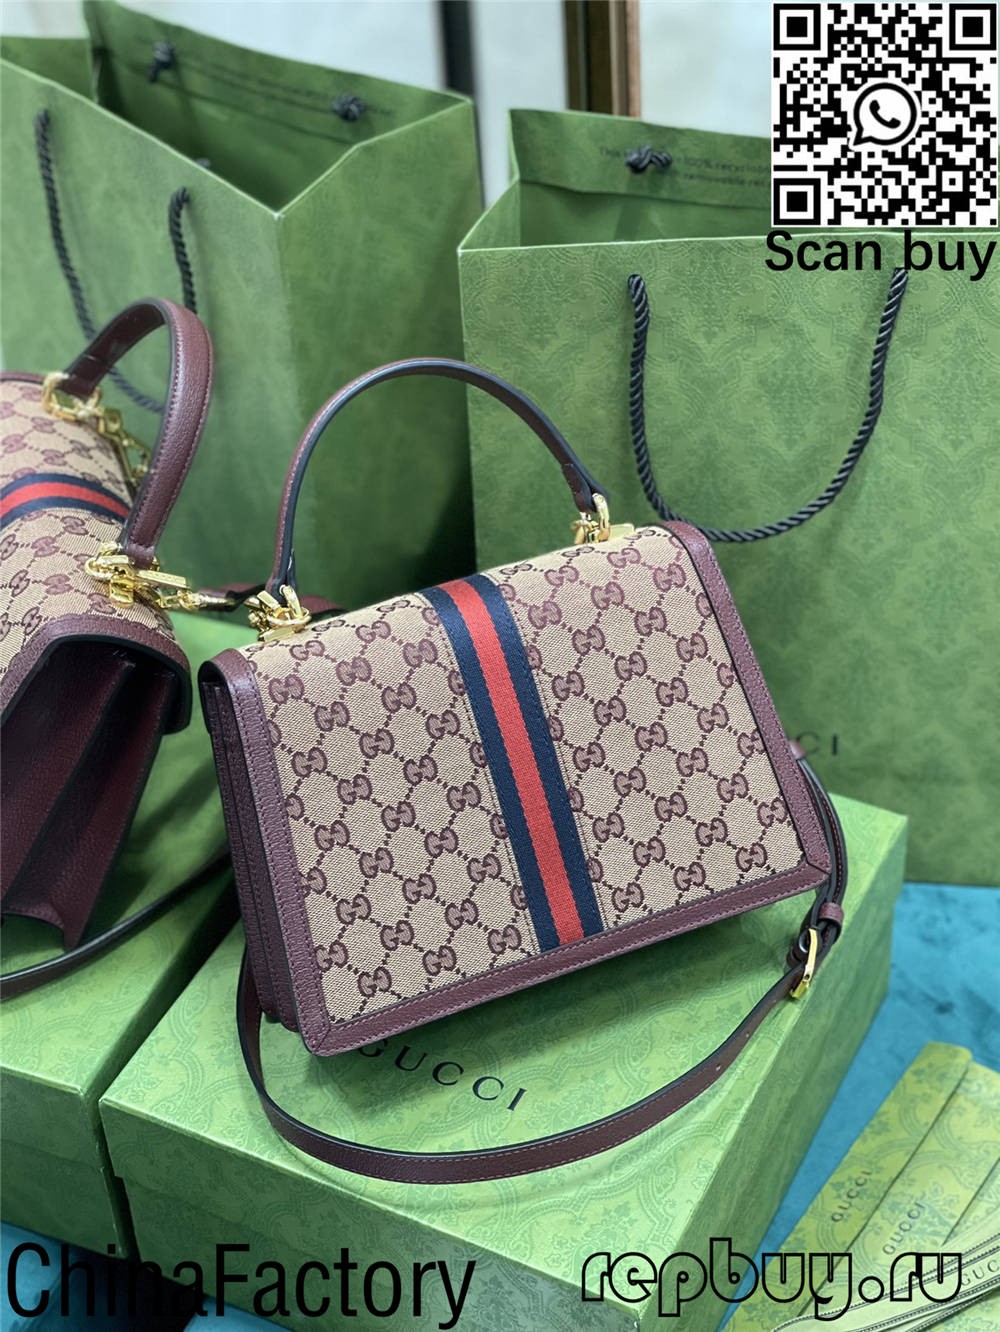 Gucci’s top 12 best replica bags to buy (2022 updated)-Best Quality Fake designer Bag Review, Replica designer bag ru